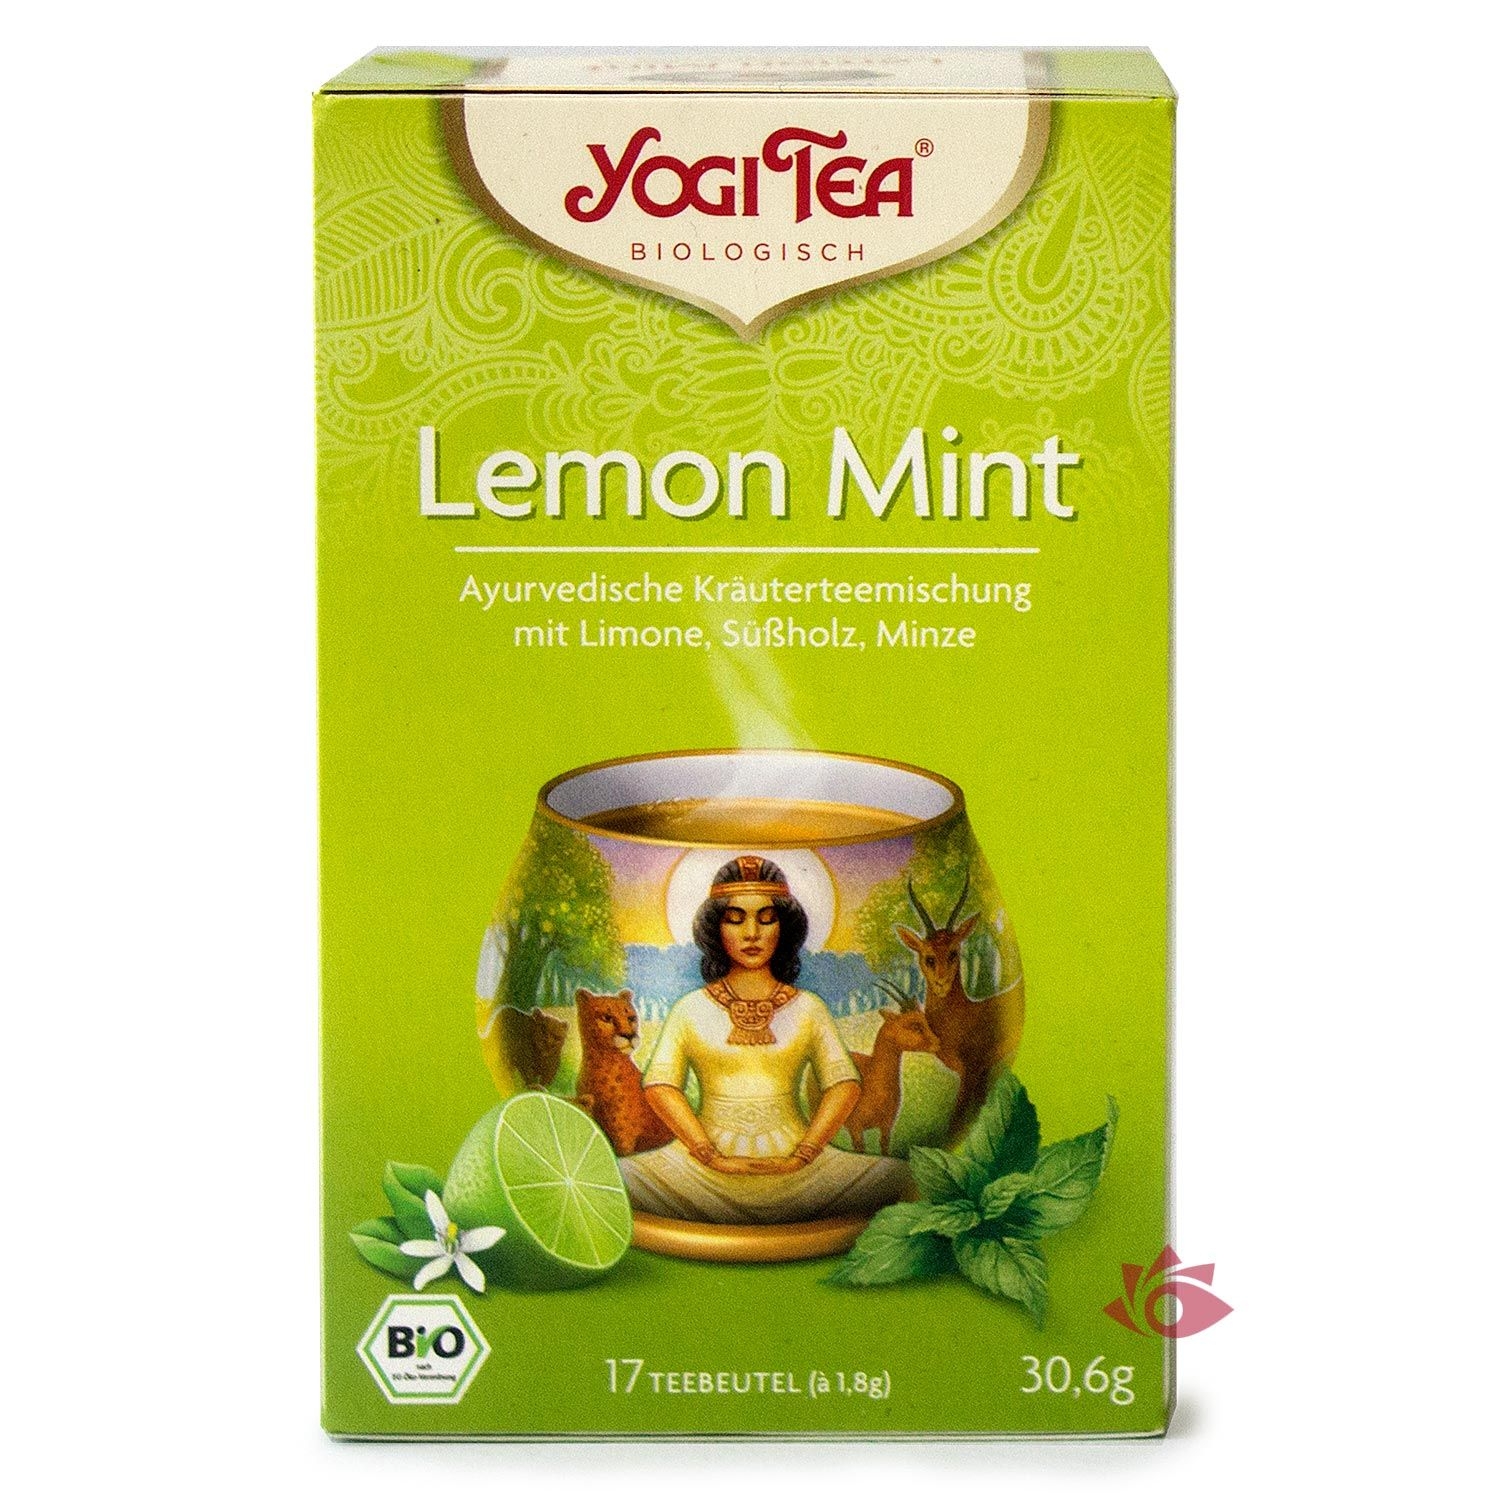 Yogi Tea Lemon Mint Organic herbals infusion